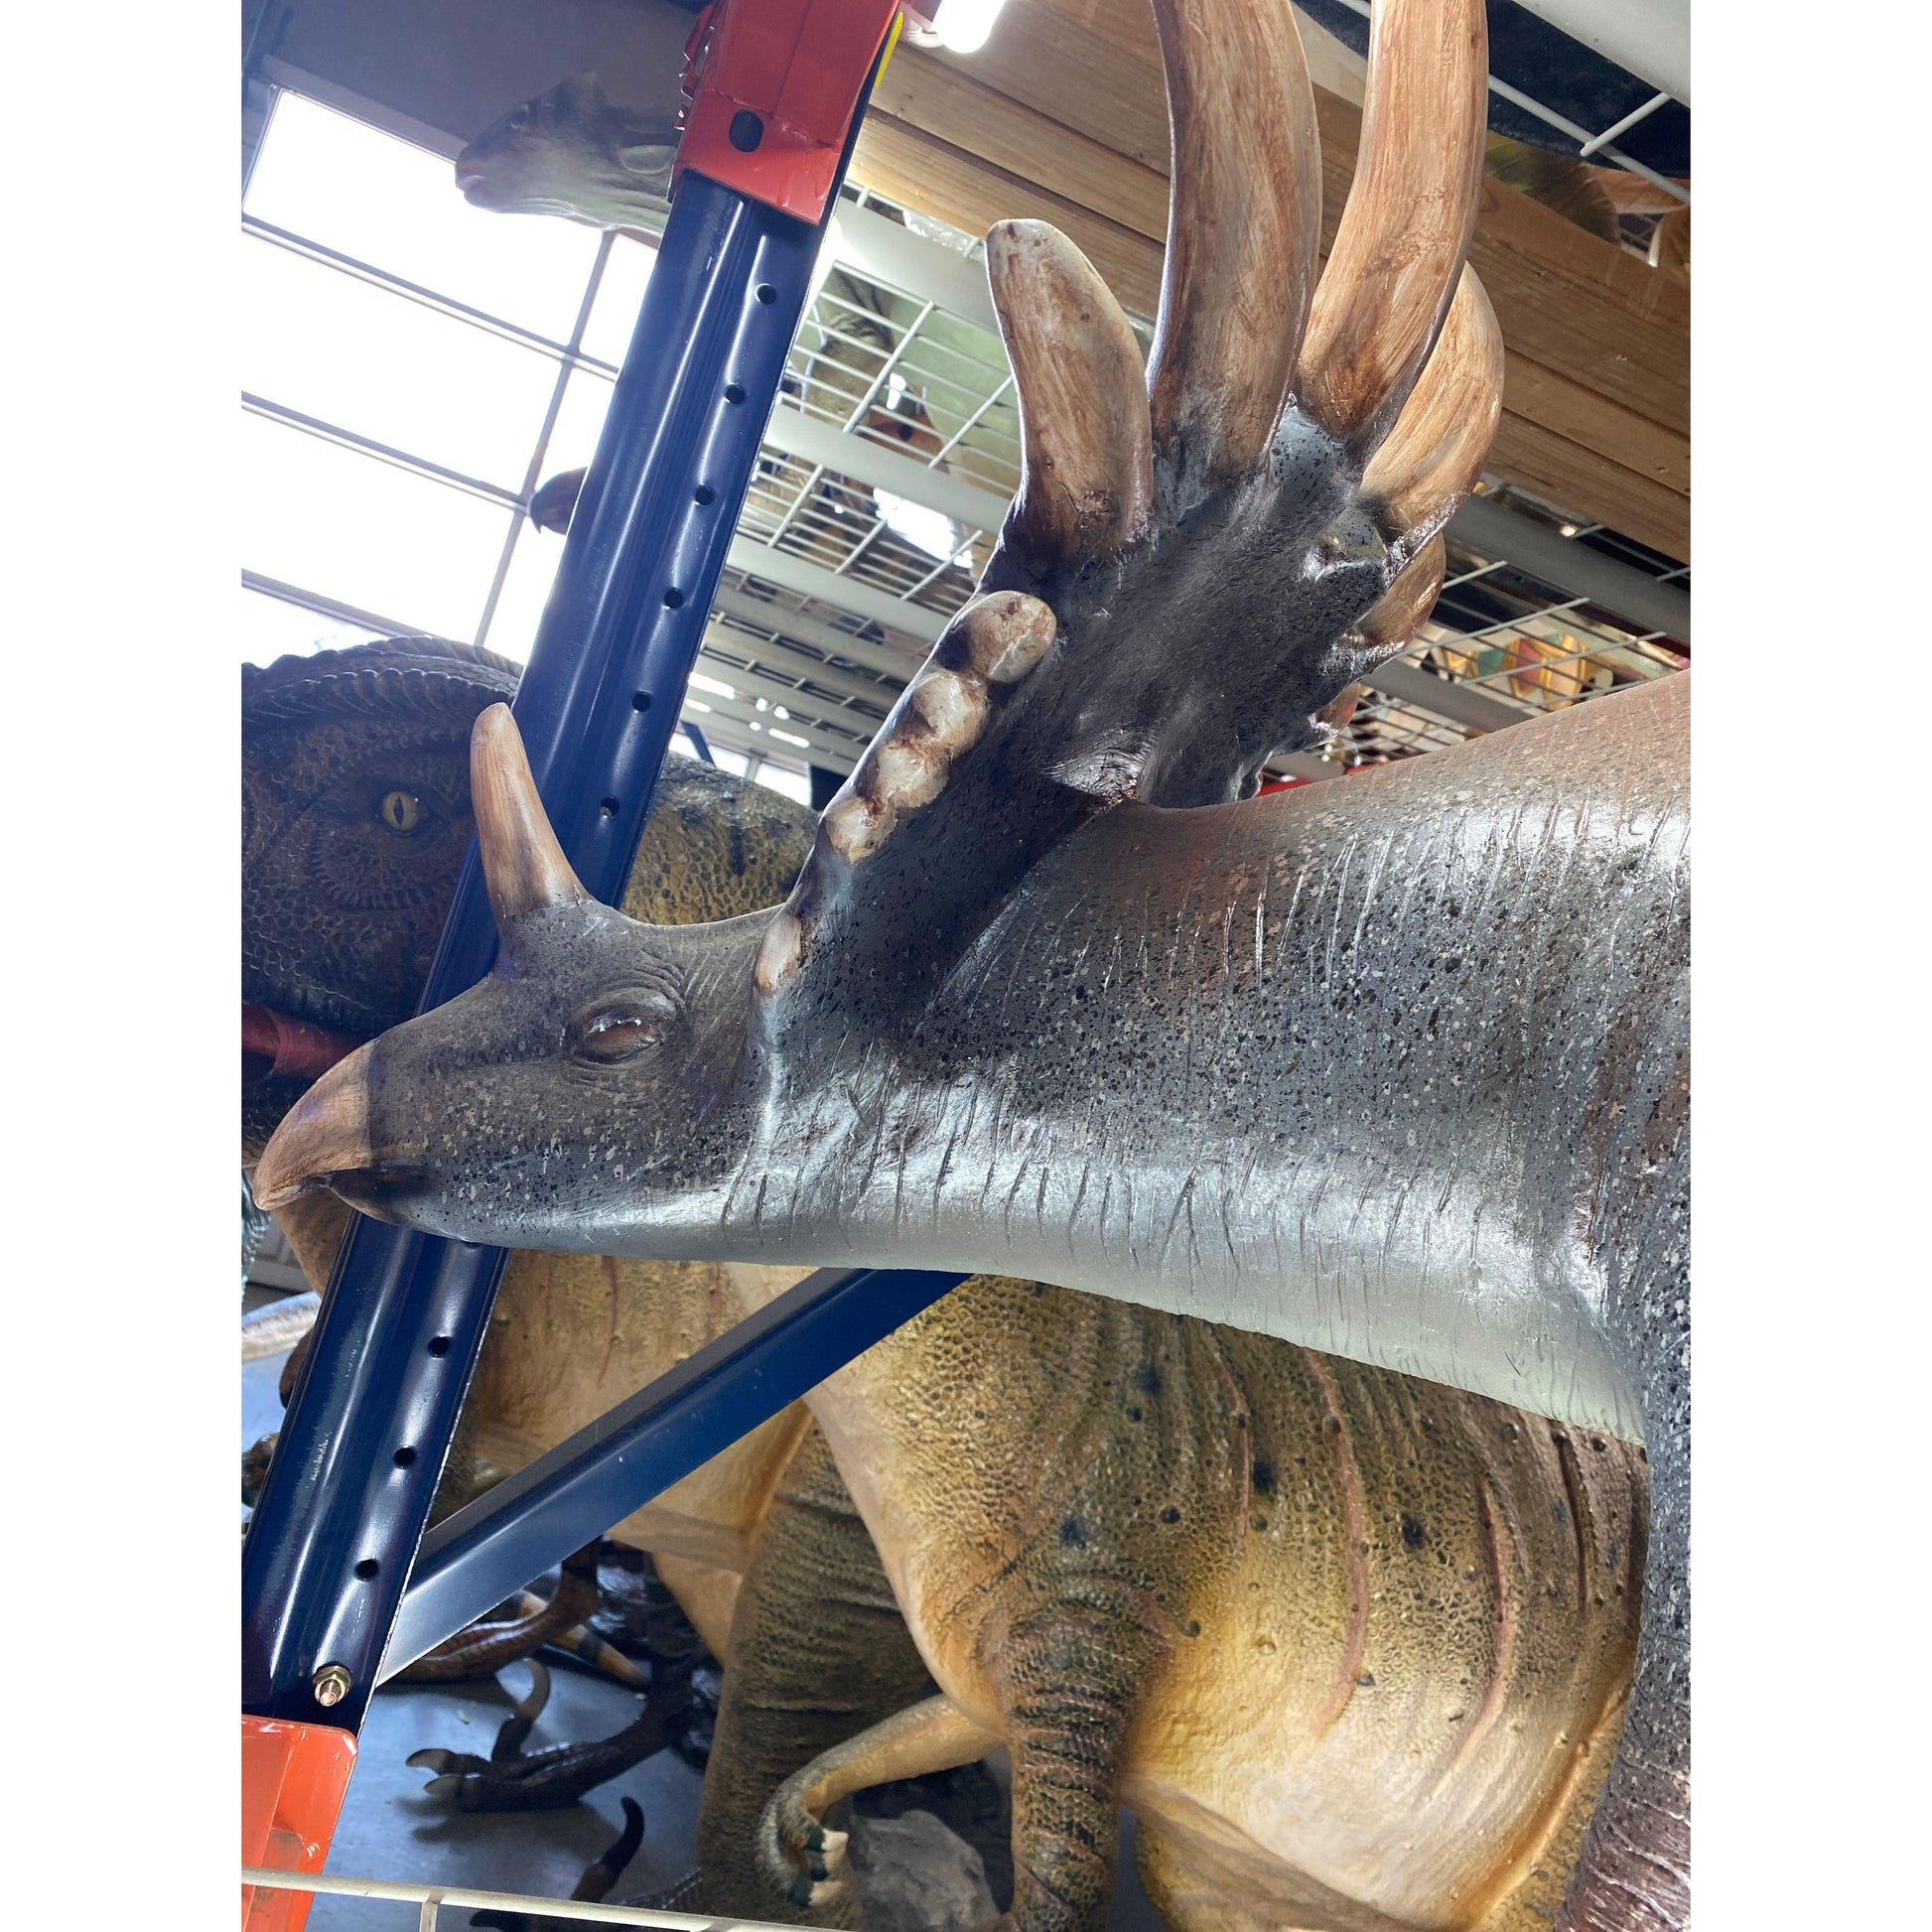 Baby Triceratops Dinosaur Life Size Statue - LM Treasures Prop Rentals 